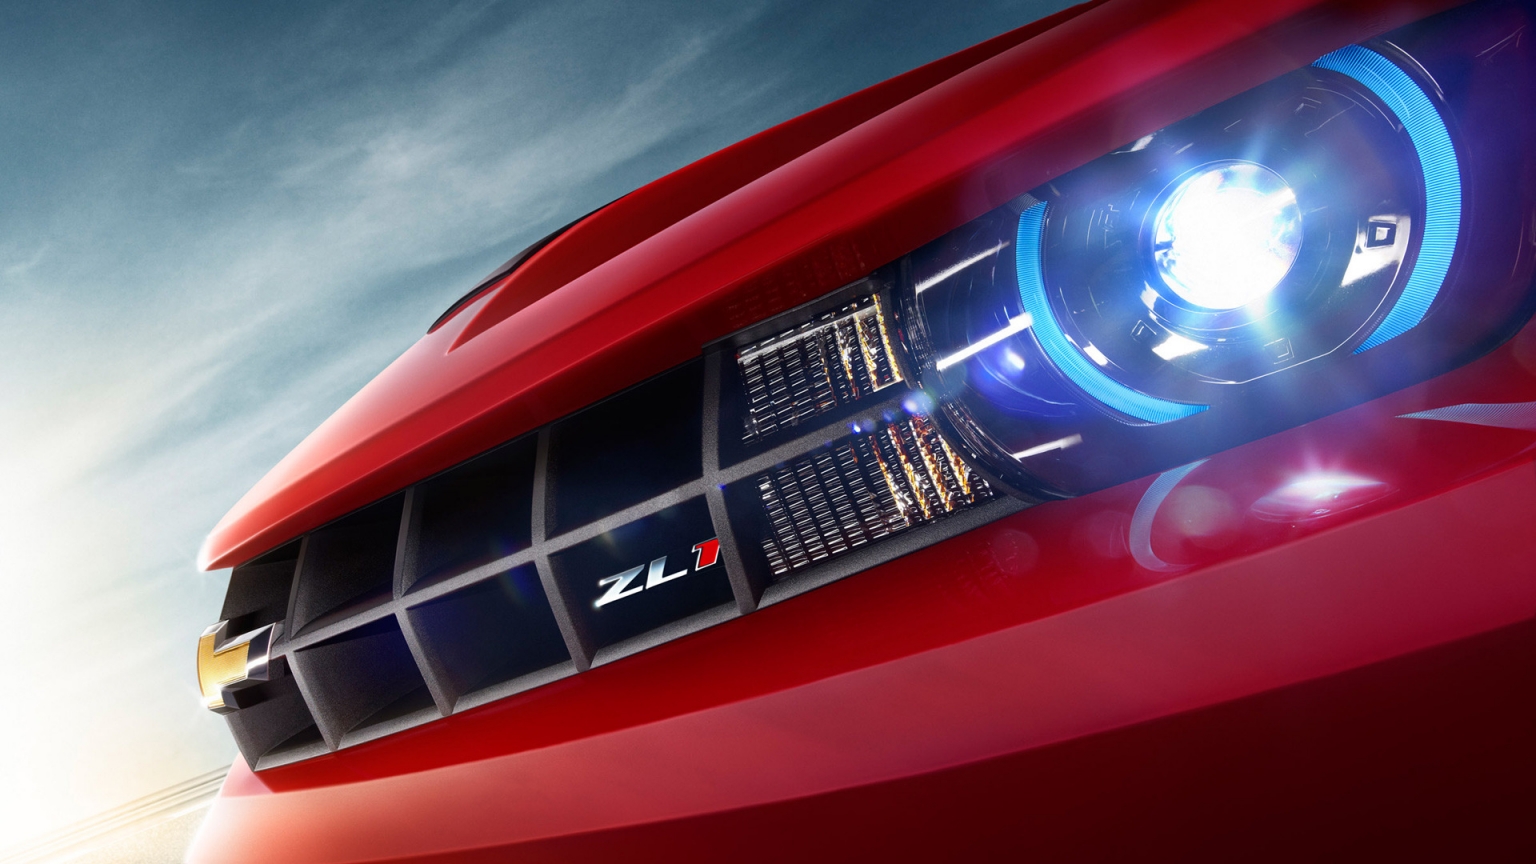 2012 Chevy Camaro ZL1 Headlight for 1536 x 864 HDTV resolution